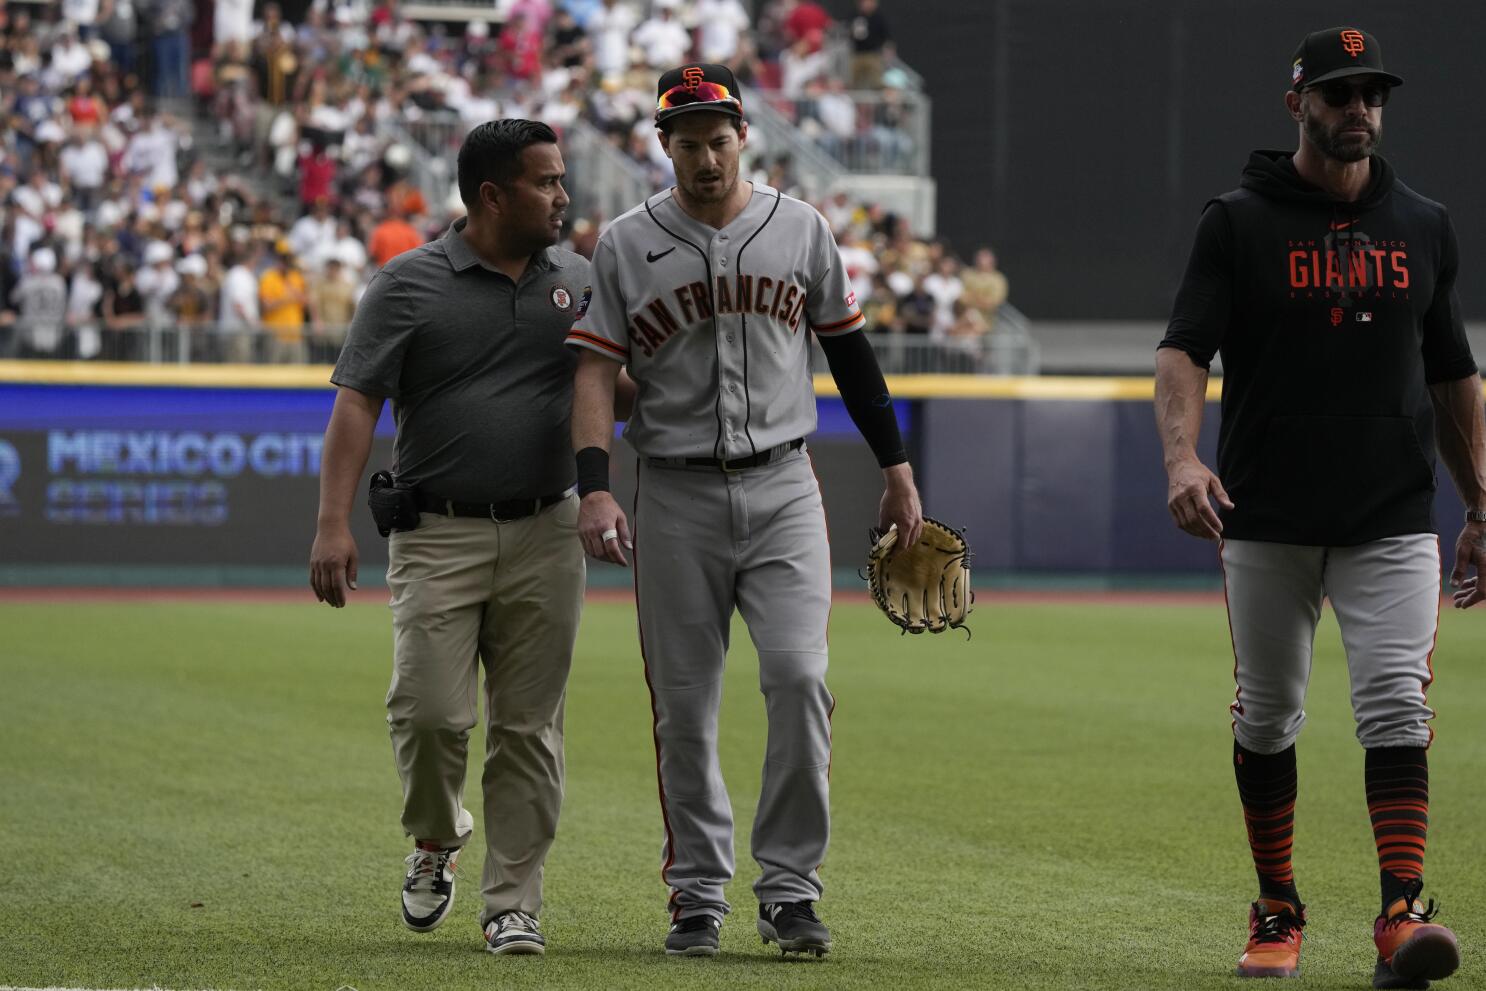 MLB: Carl Yastrzemski's grandson Mike gets first MLB hit for Giants